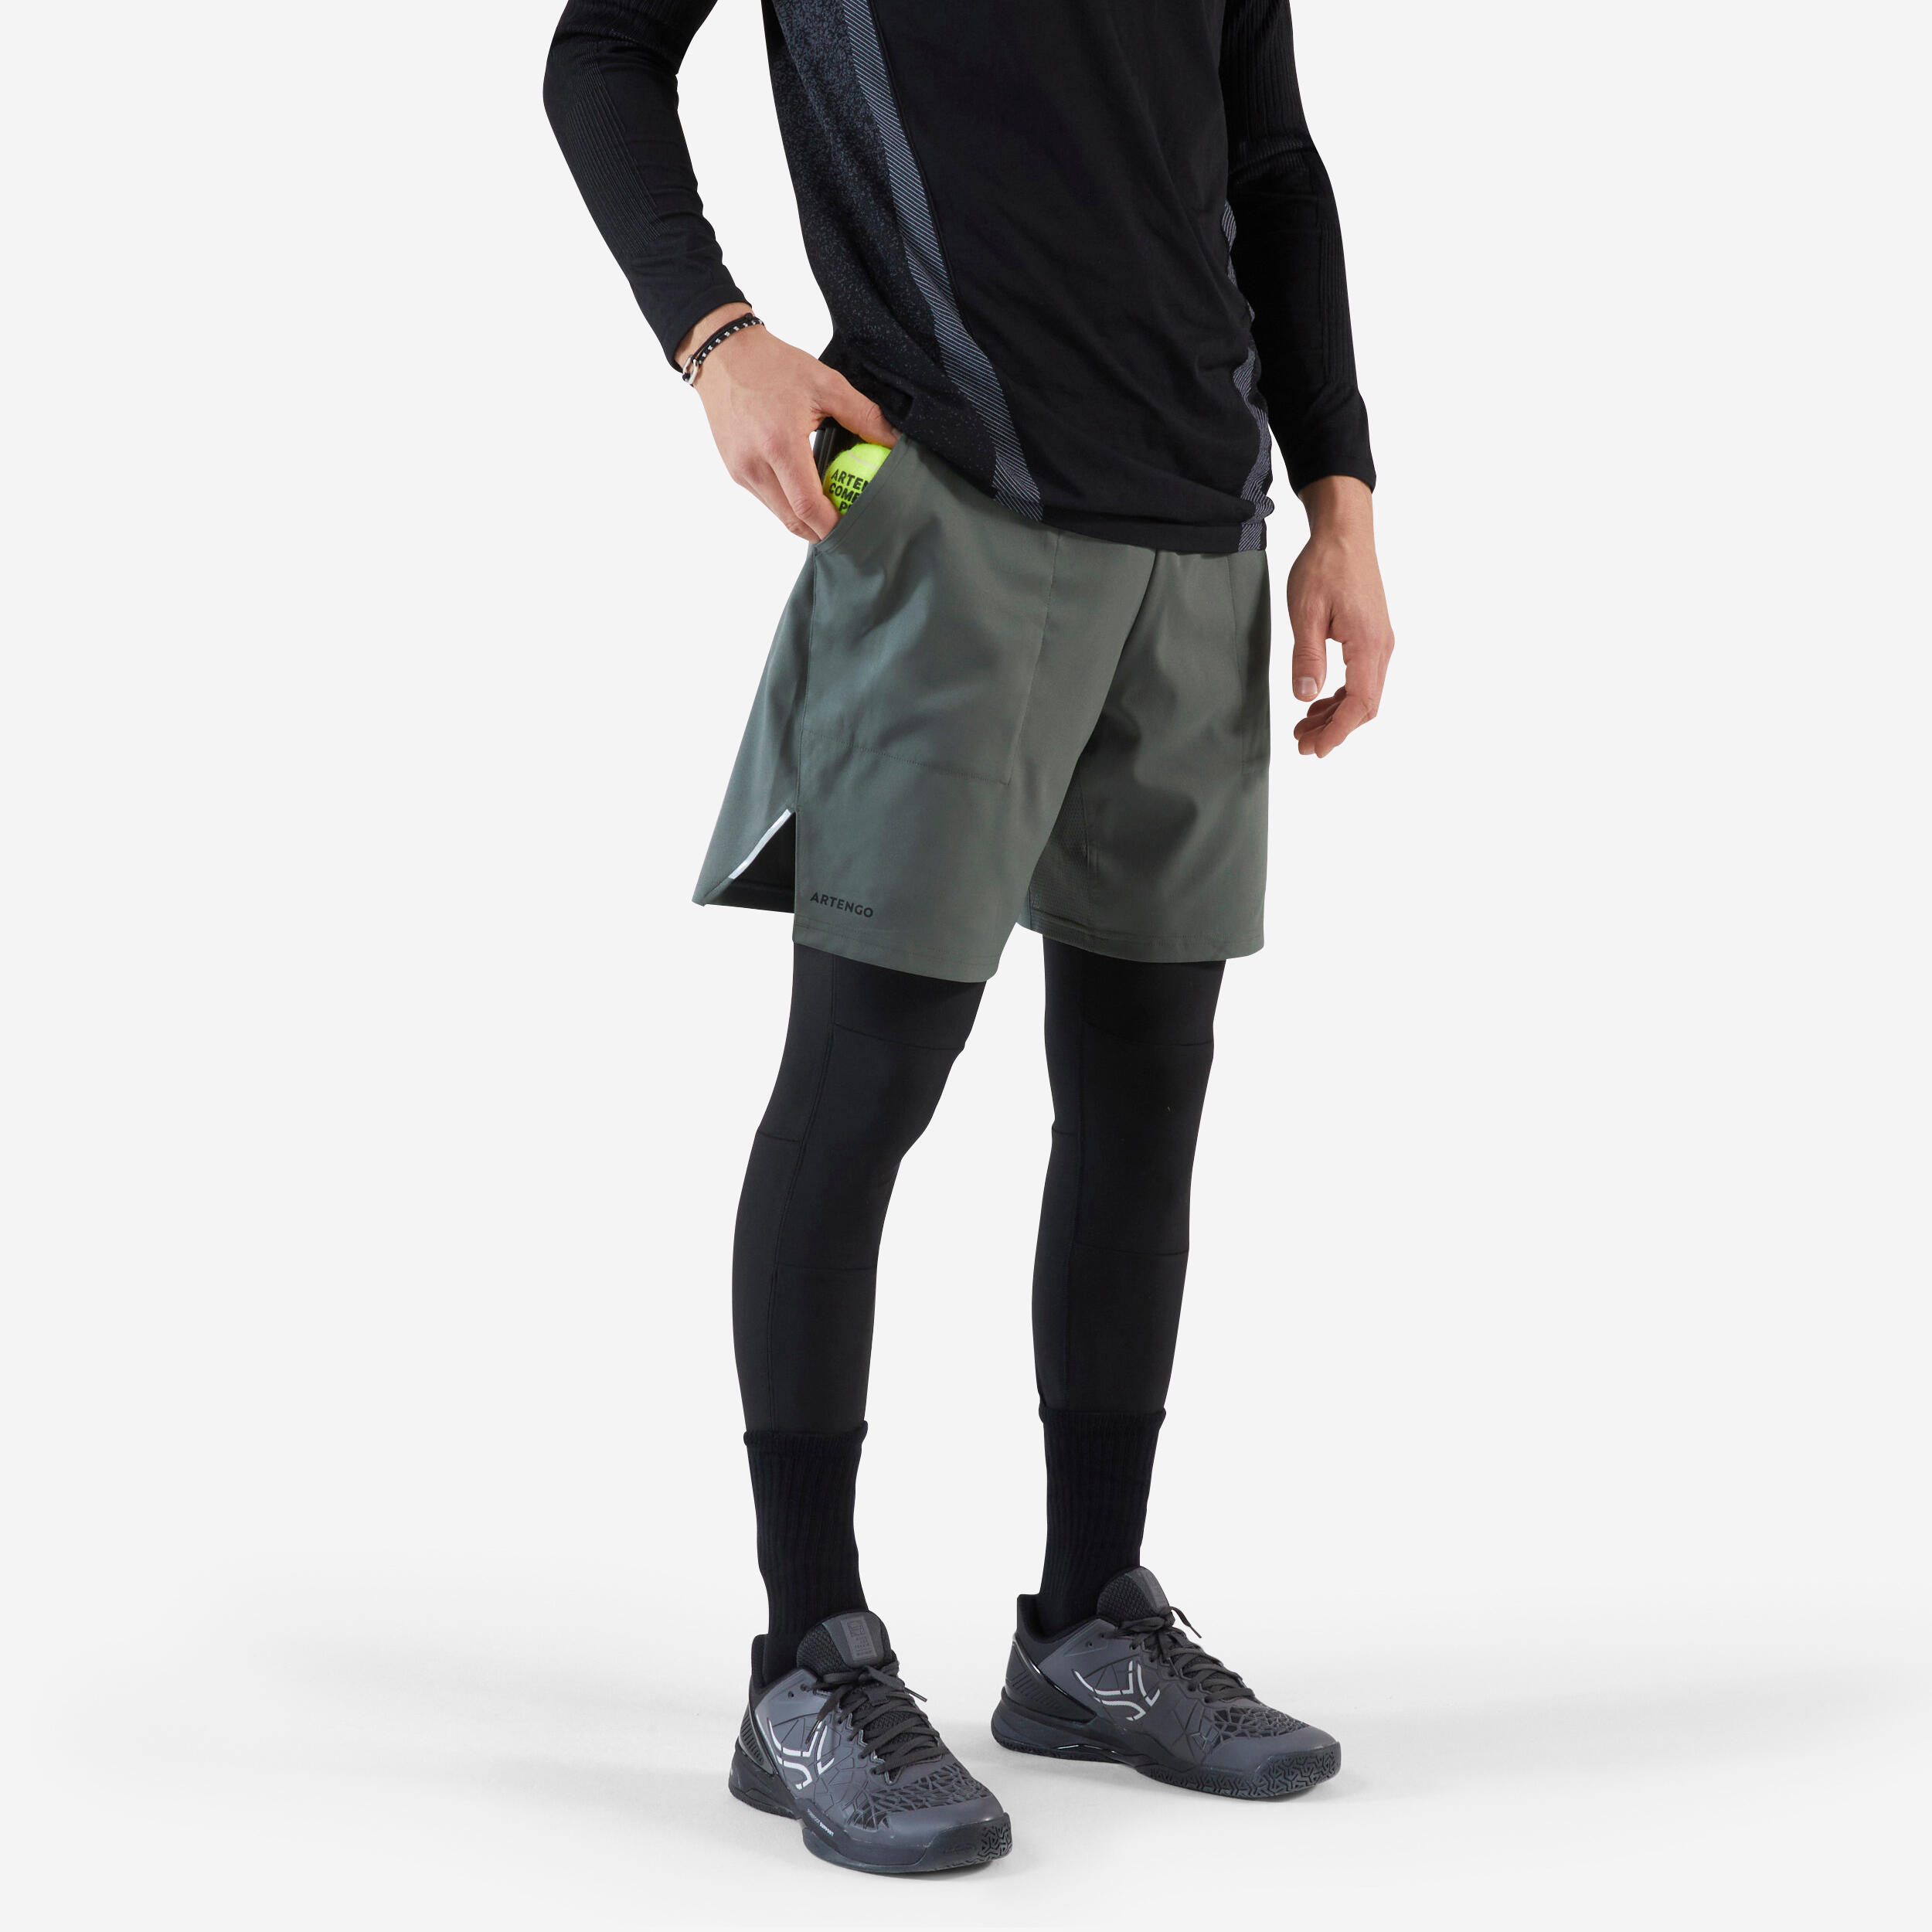 ARTENGO 2-in-1 Legging Shorts Thermic - Grey Khaki/Black